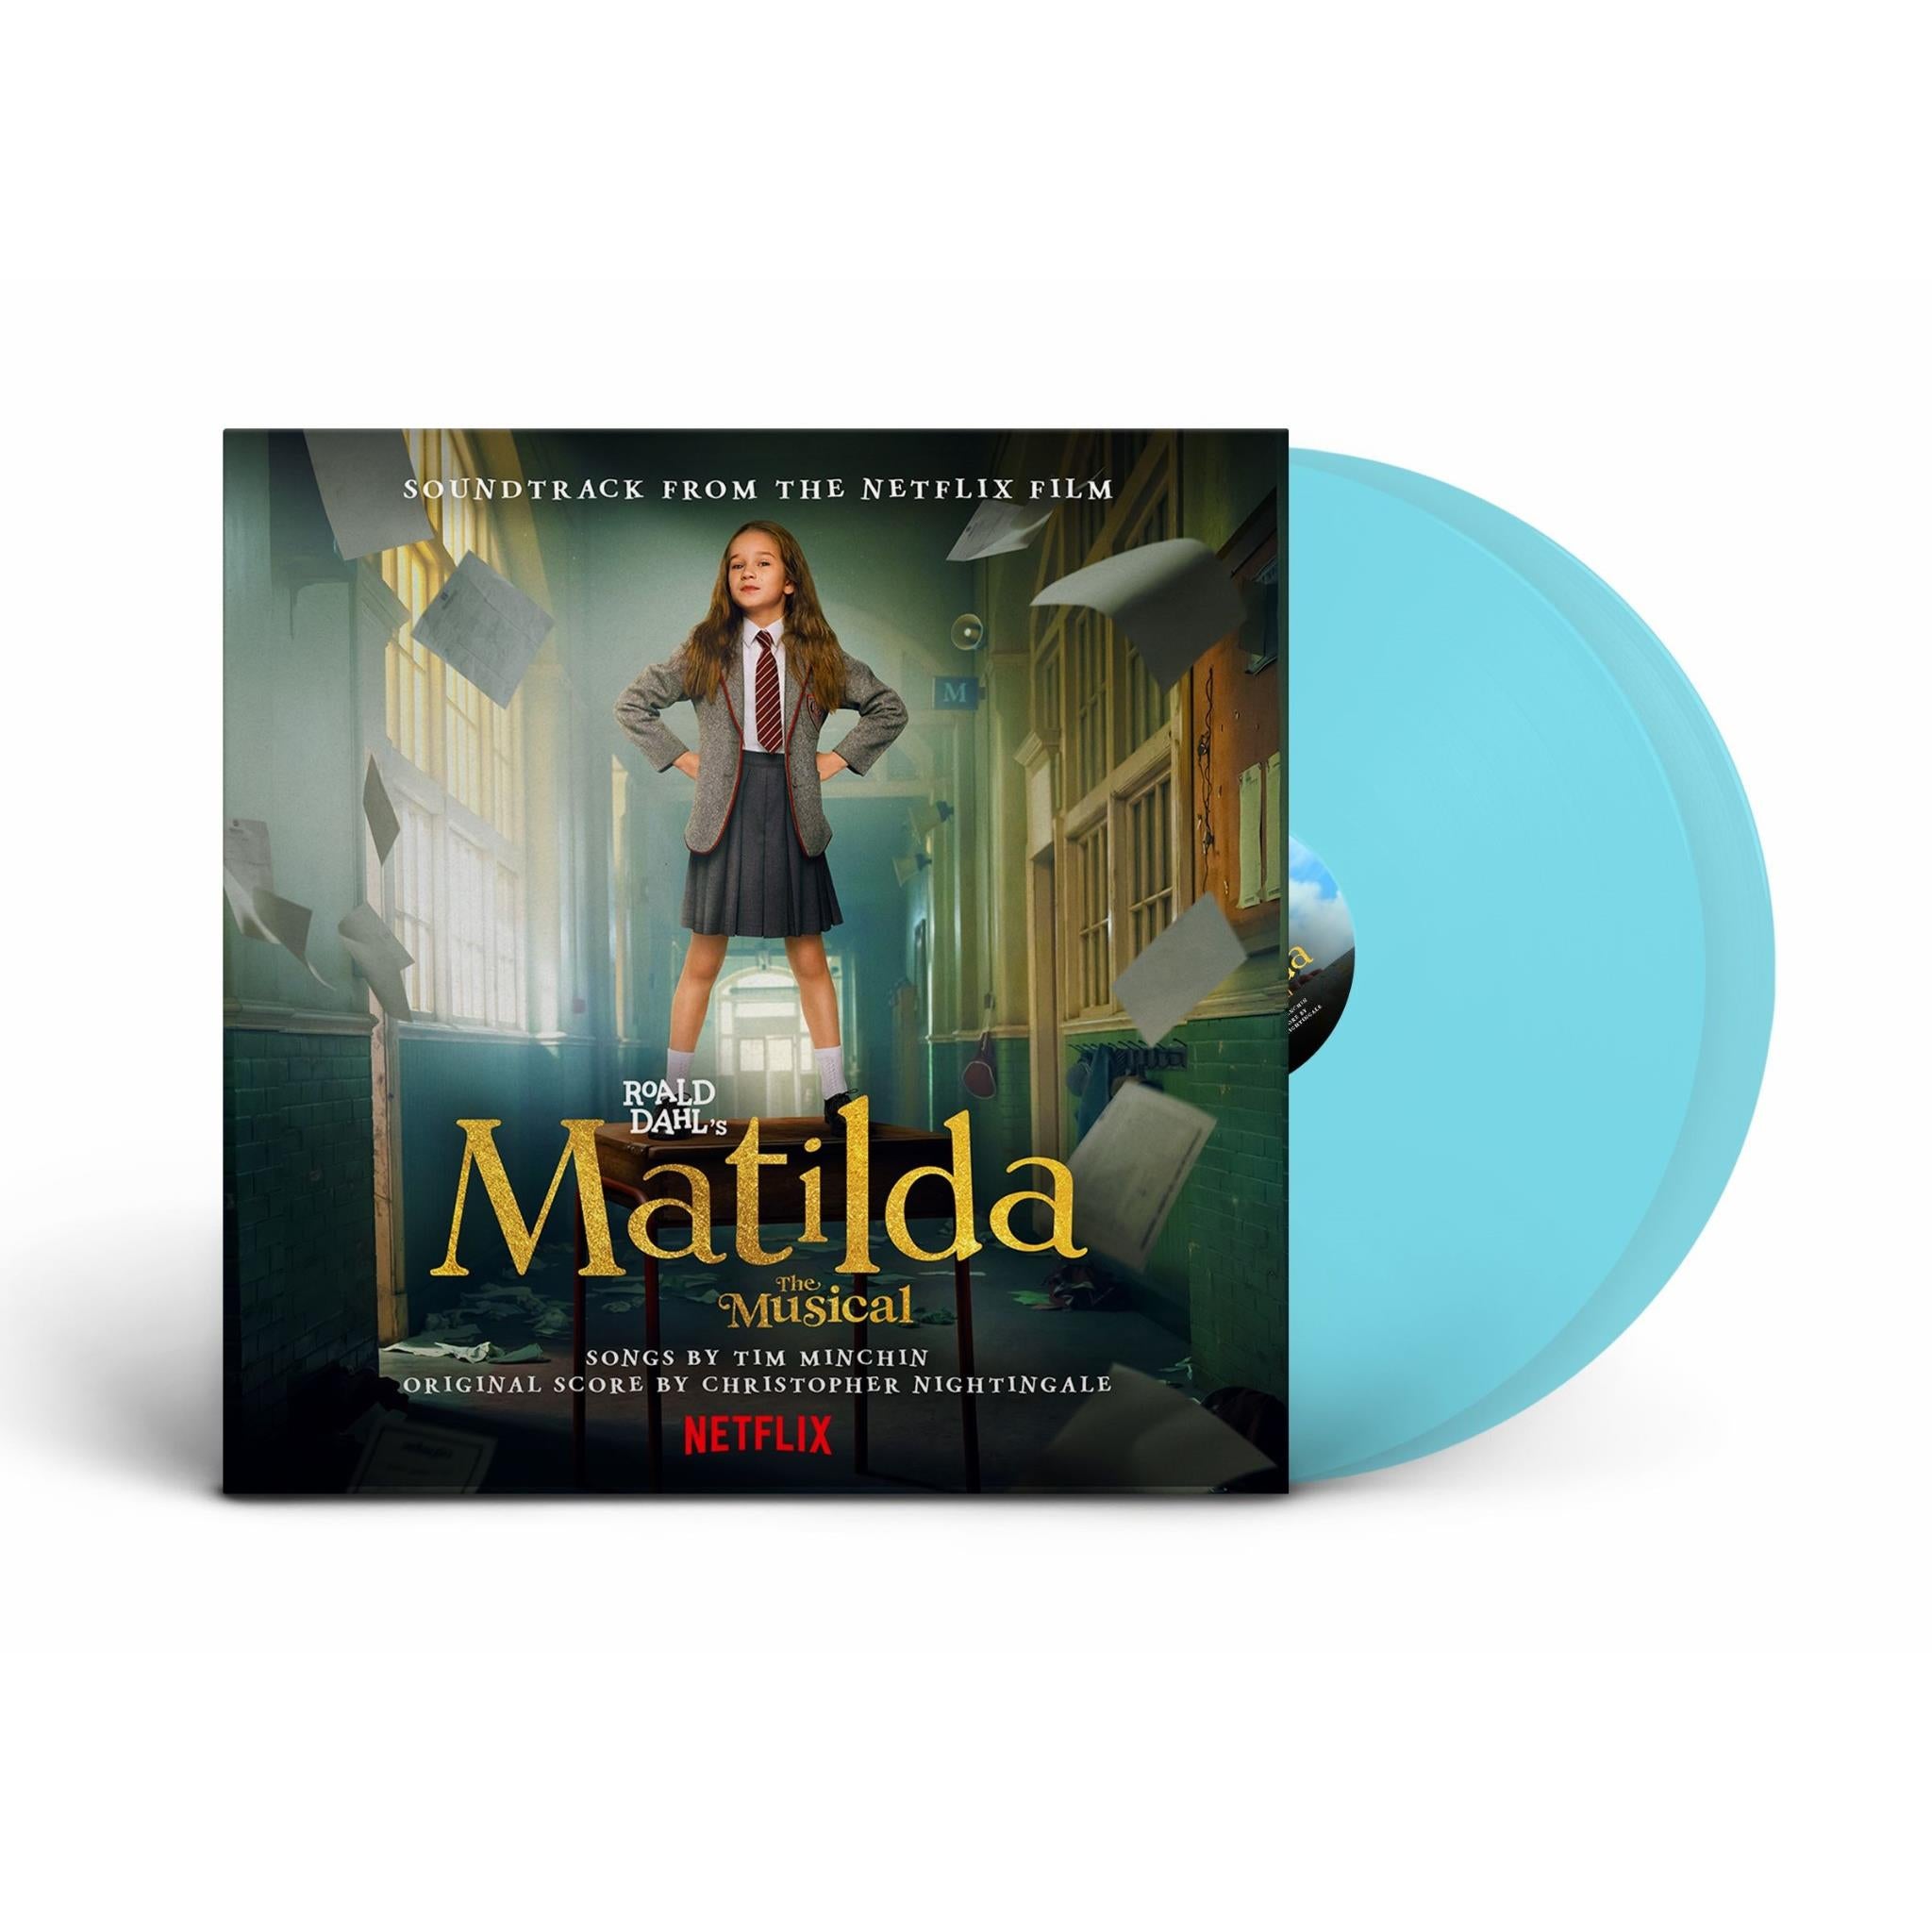 roald dahl's matilda the musical (soundtrack from the netflix film) (transparent light blue vinyl)